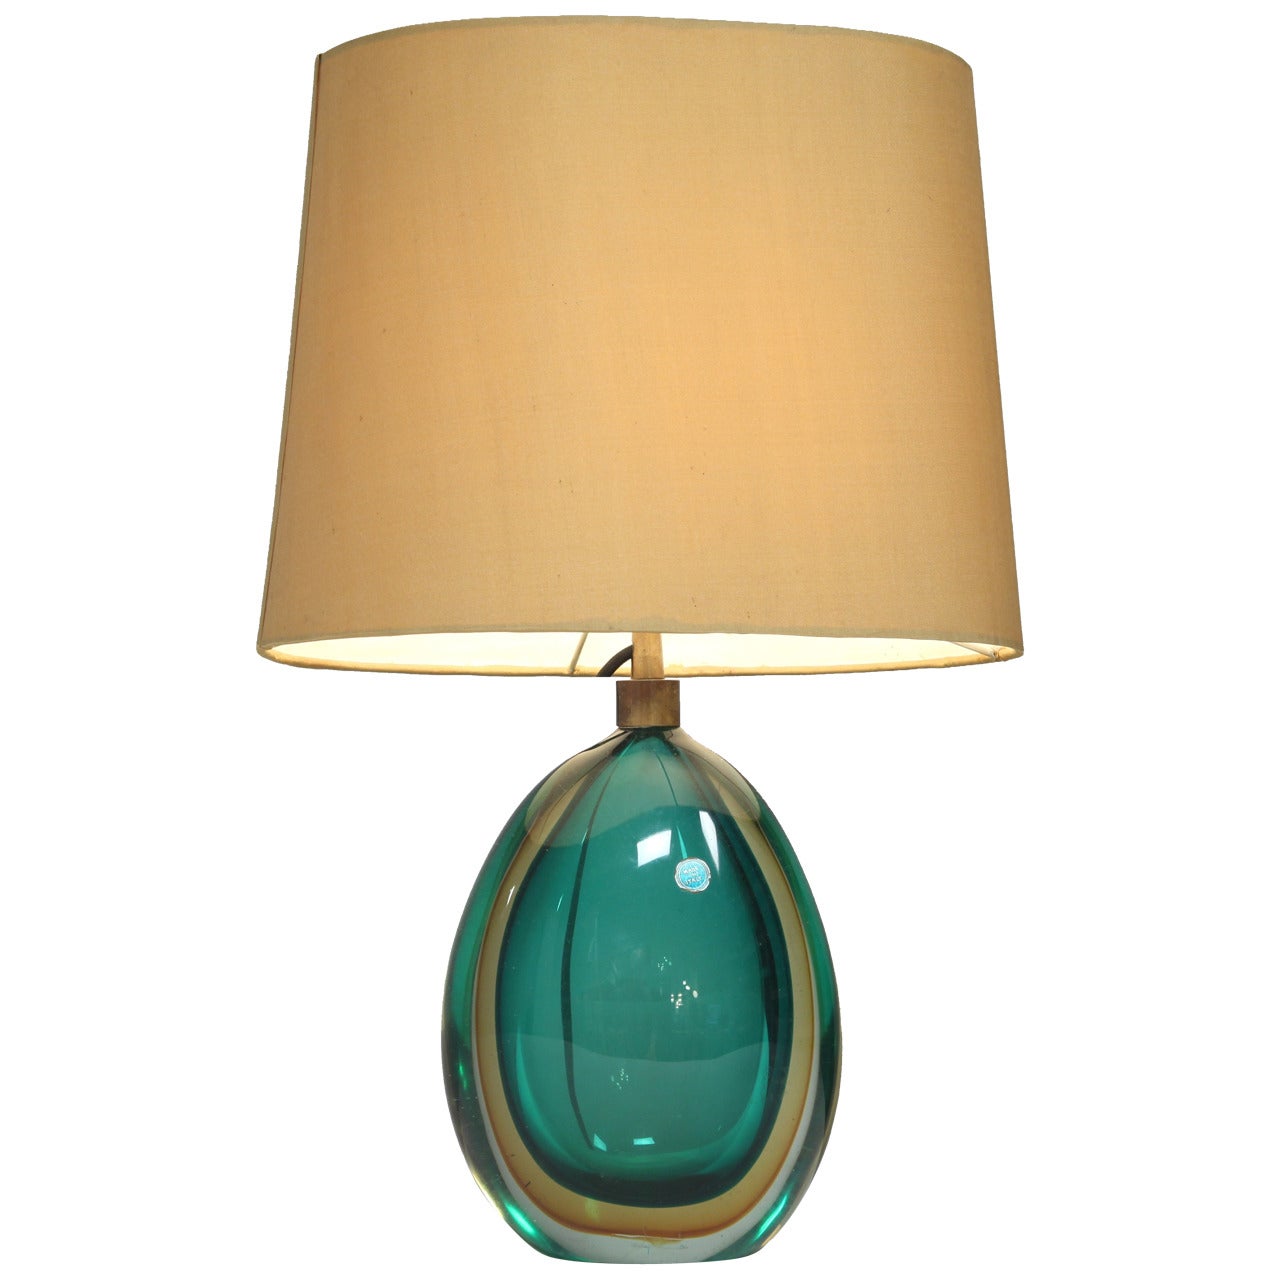 Flavio Poli Murano Glass Table Lamp, Seguso, Italy, 1950s For Sale